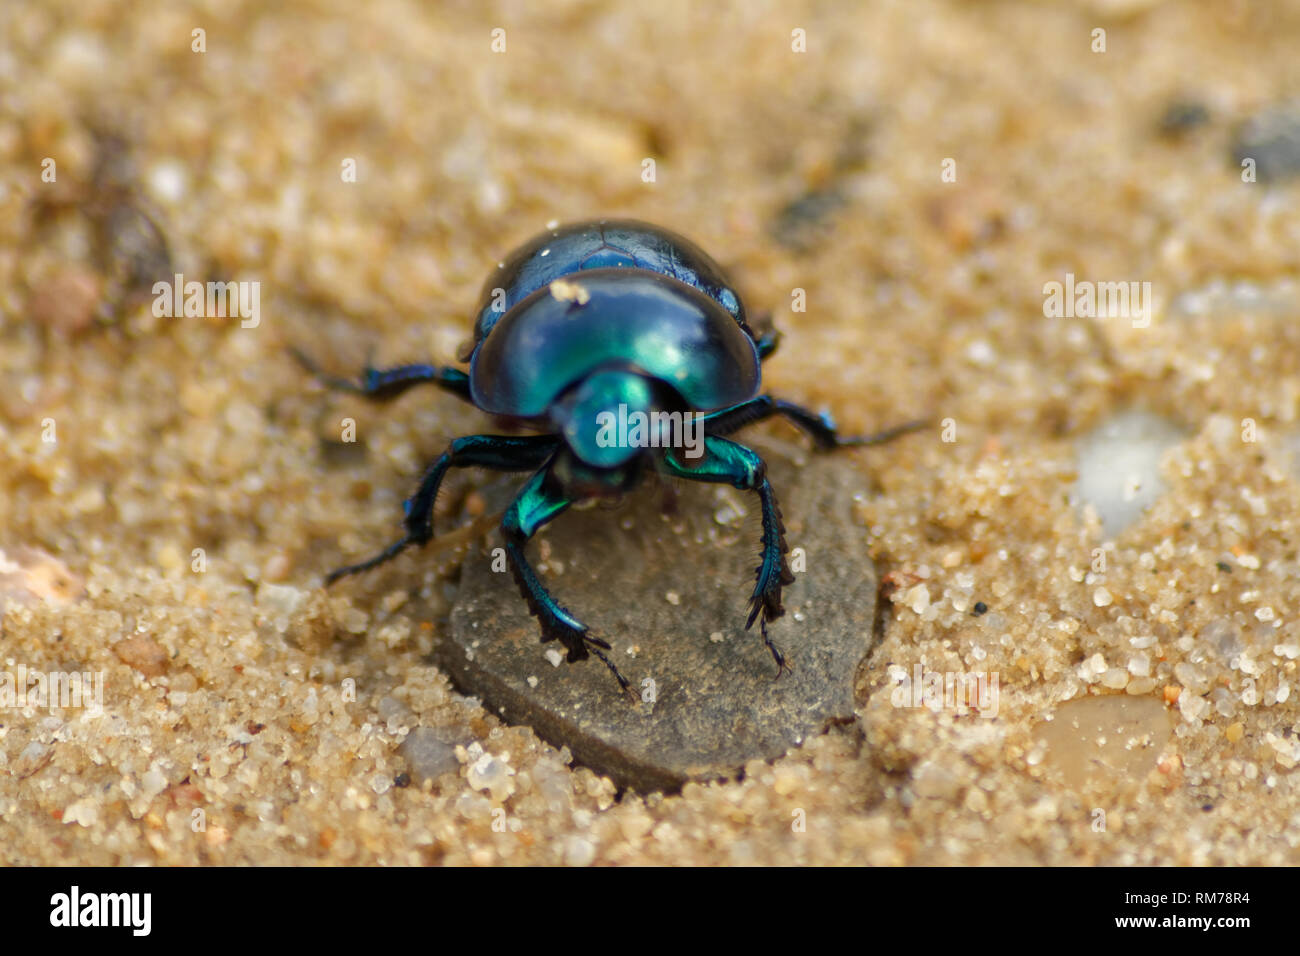 Spring dor beetle (Trypocopris vernalis) Stock Photo